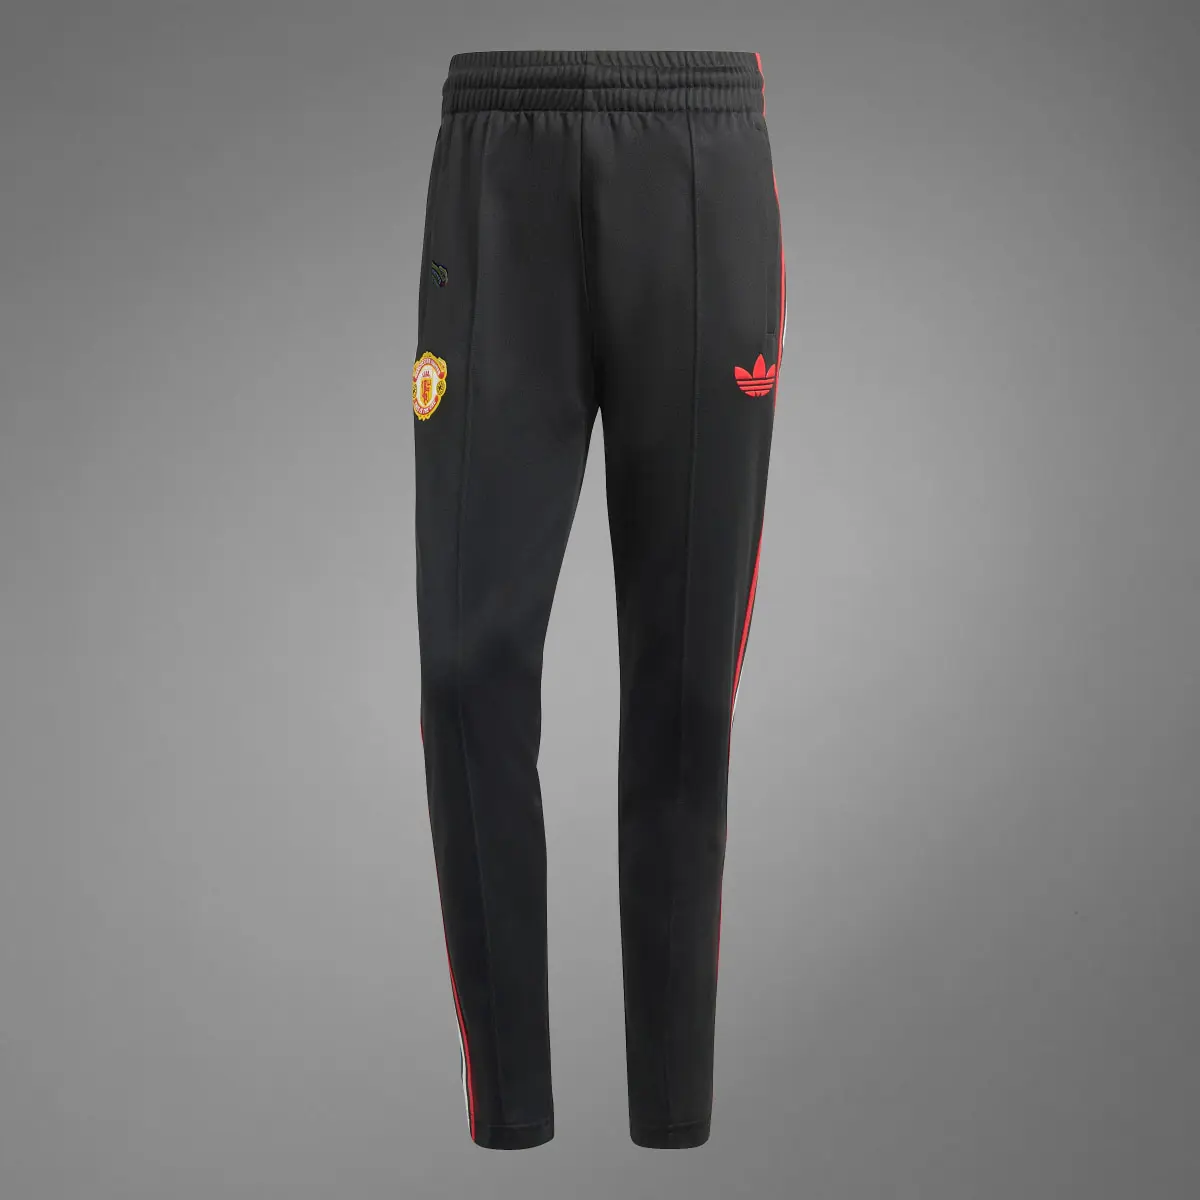 Adidas Pantalón Manchester United Stone Roses Originals. 3